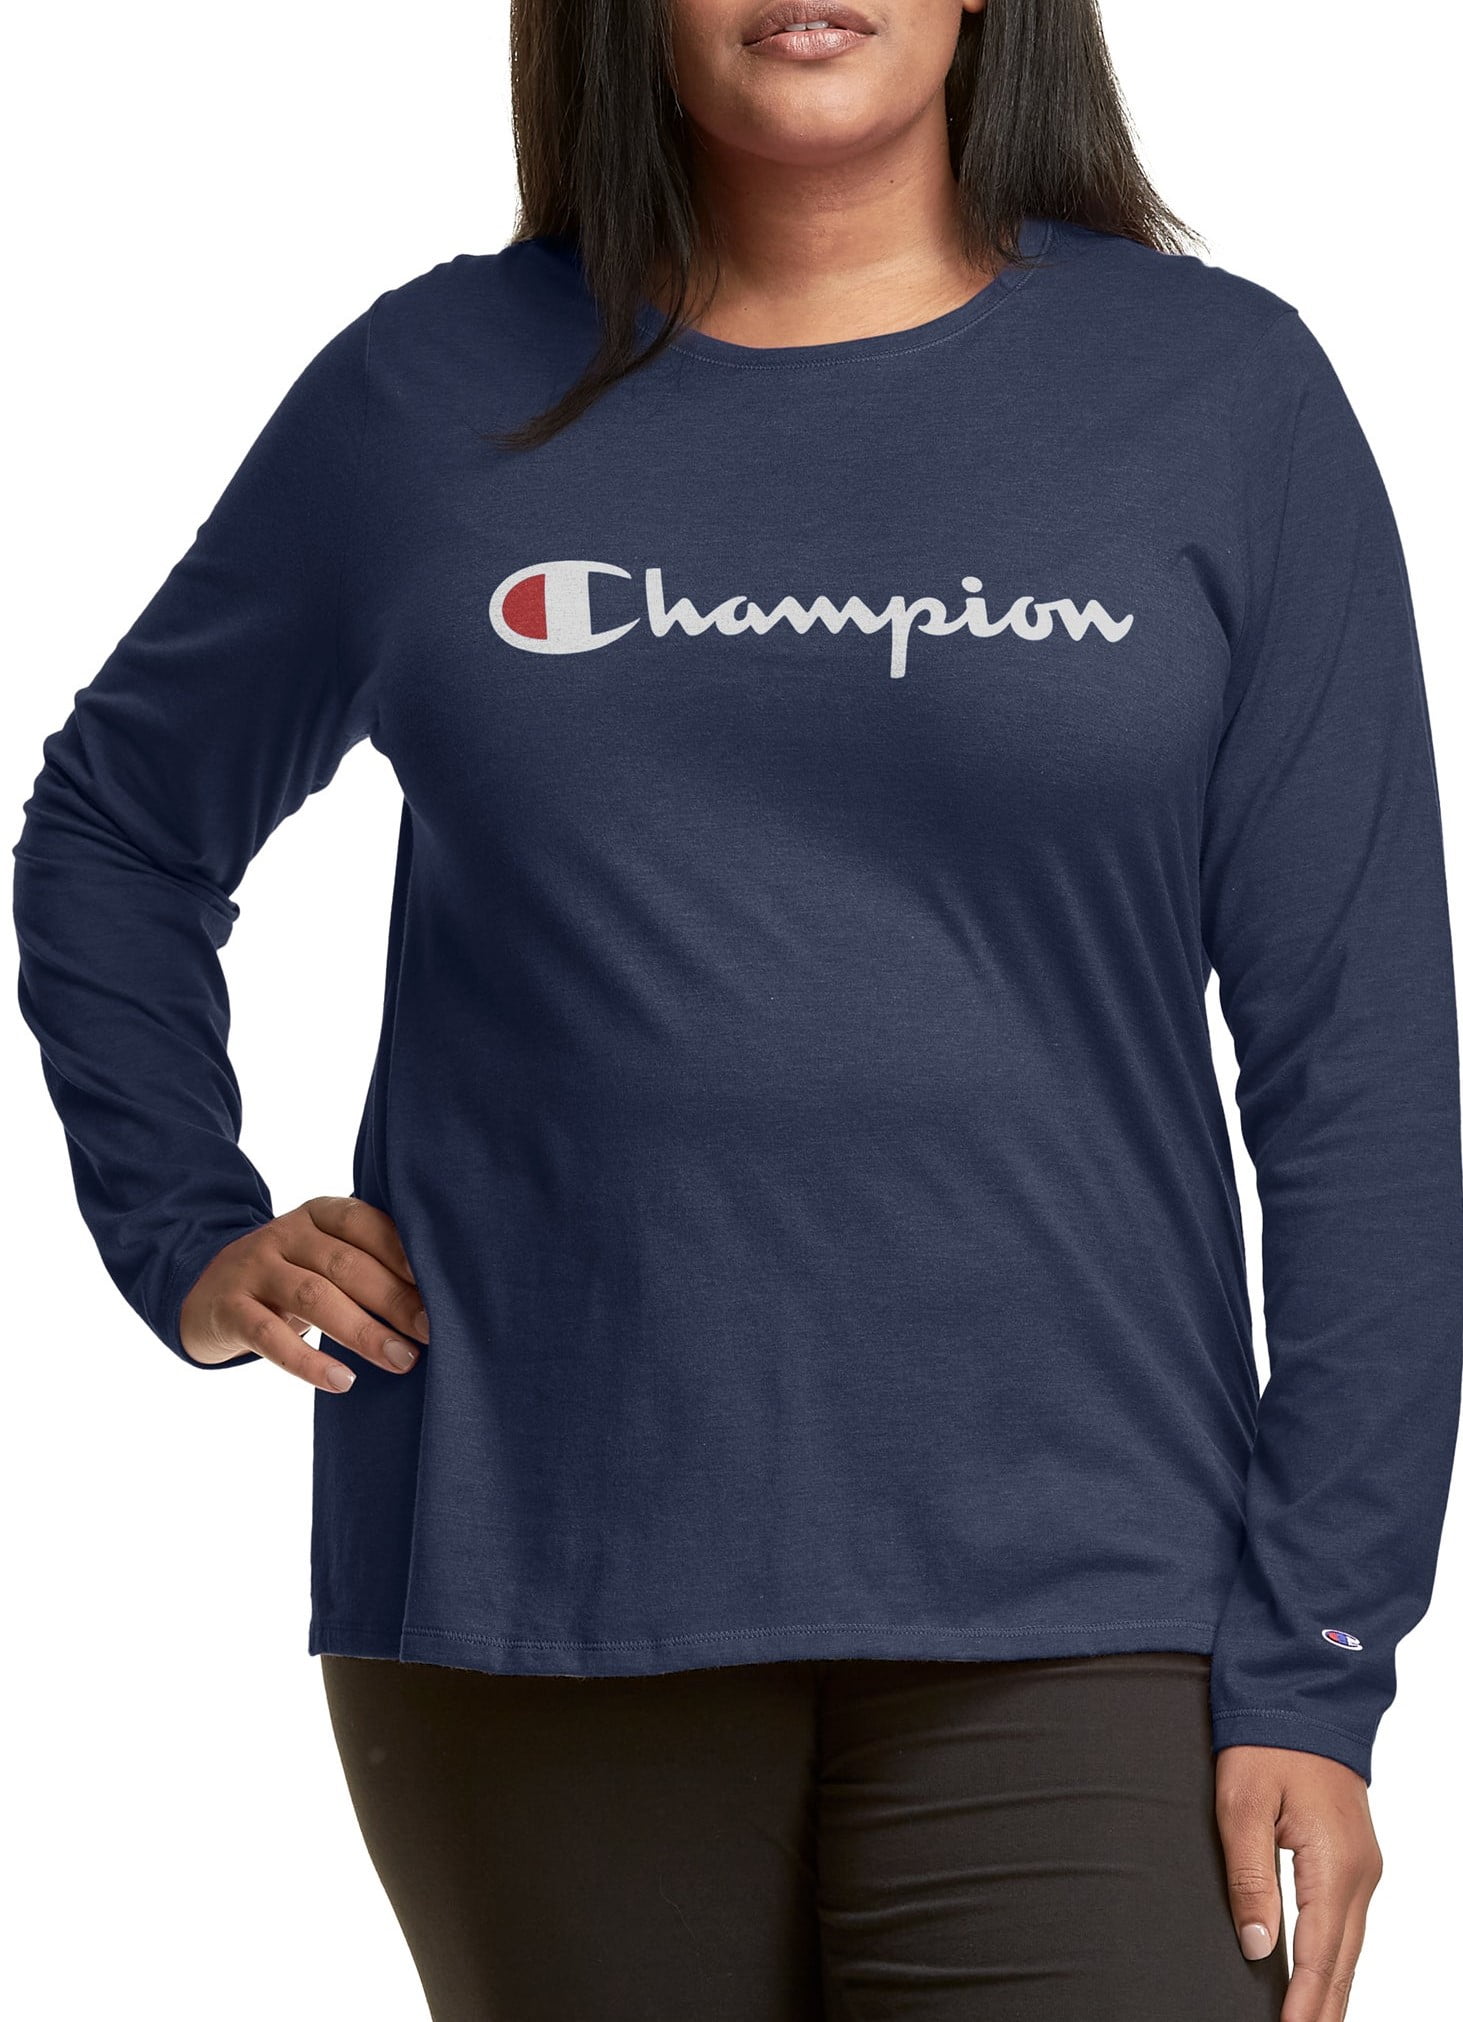 champion t shirt walmart